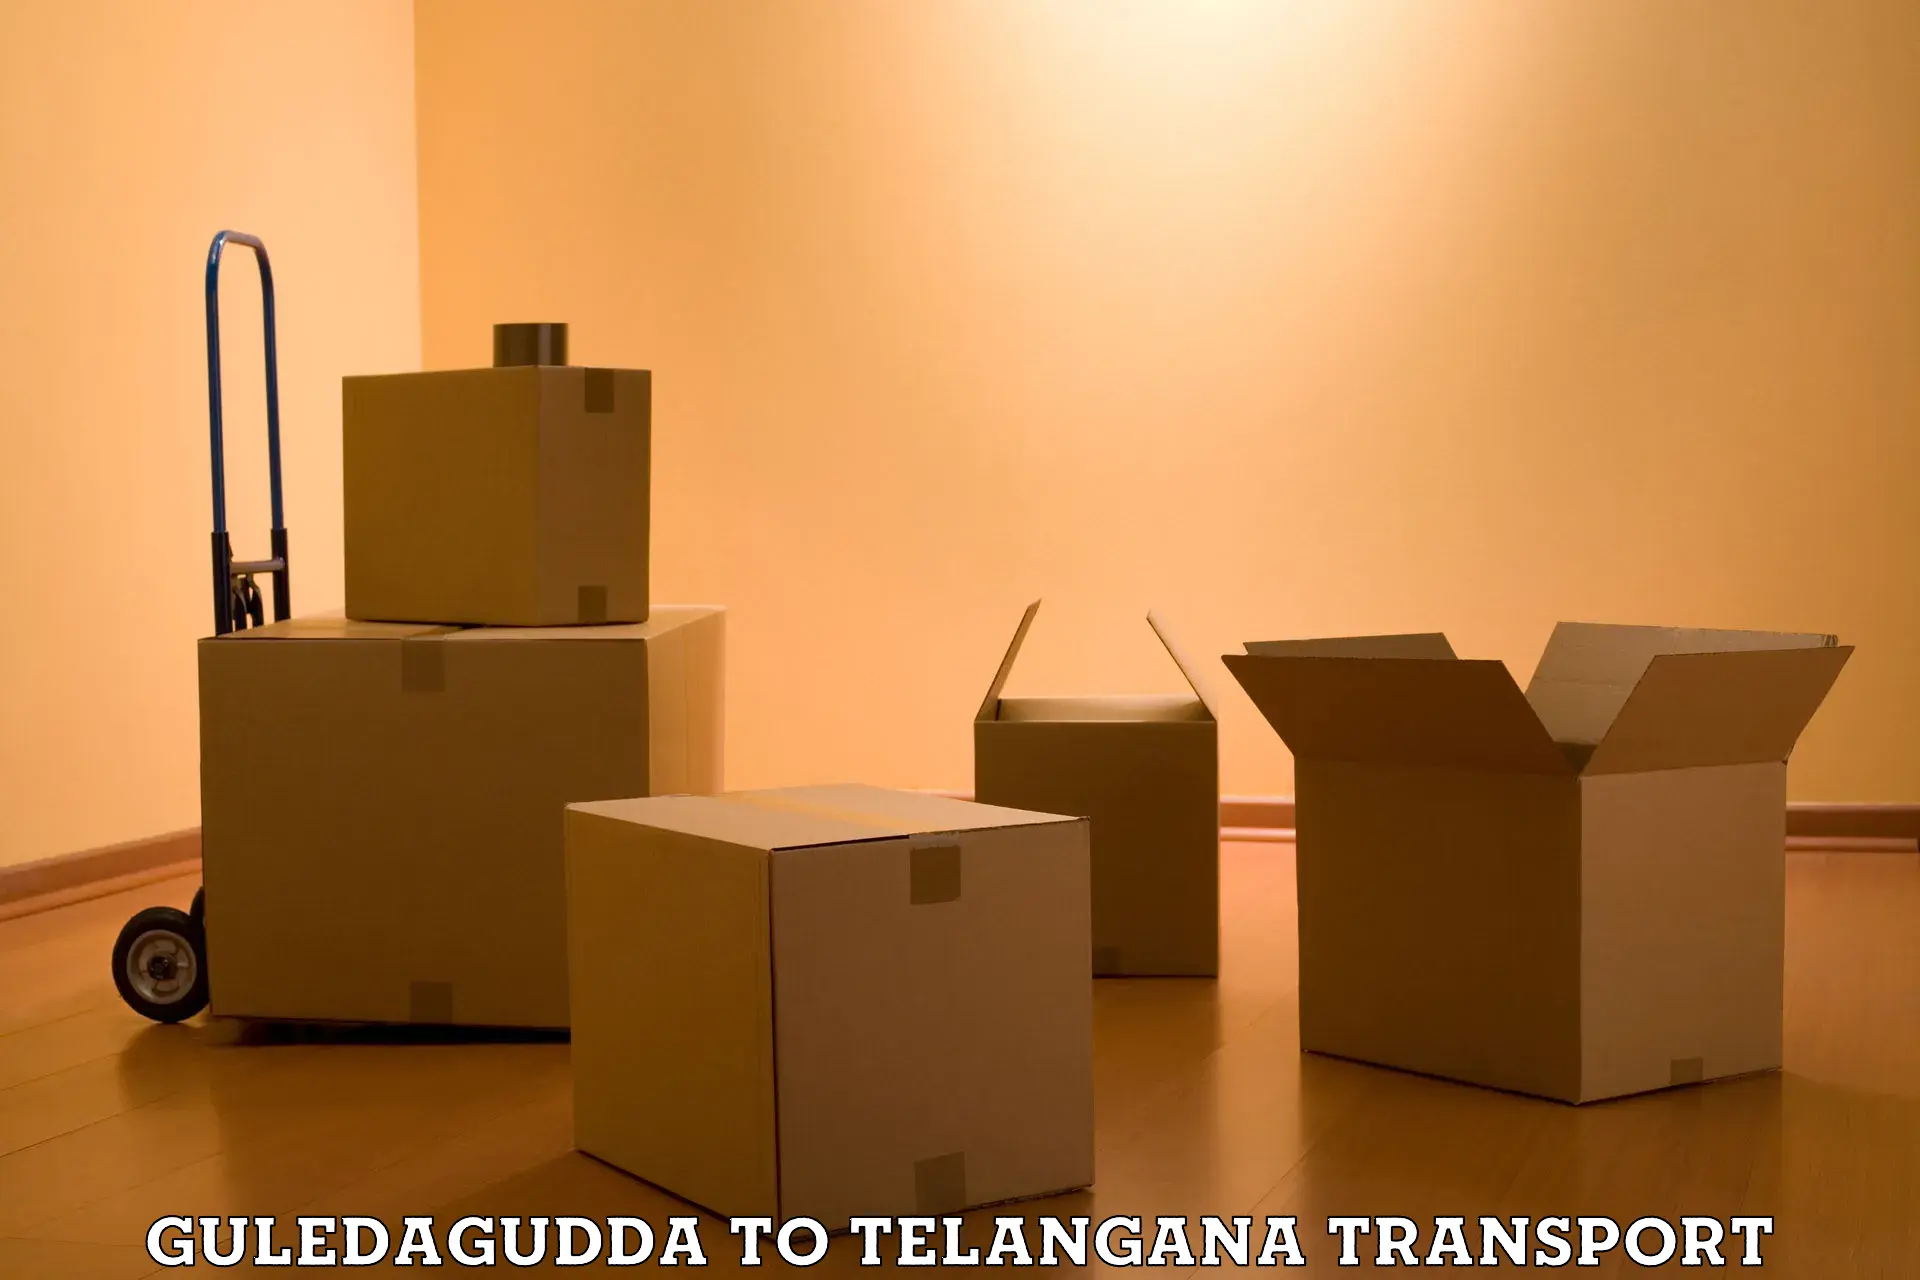 Daily transport service Guledagudda to Telangana